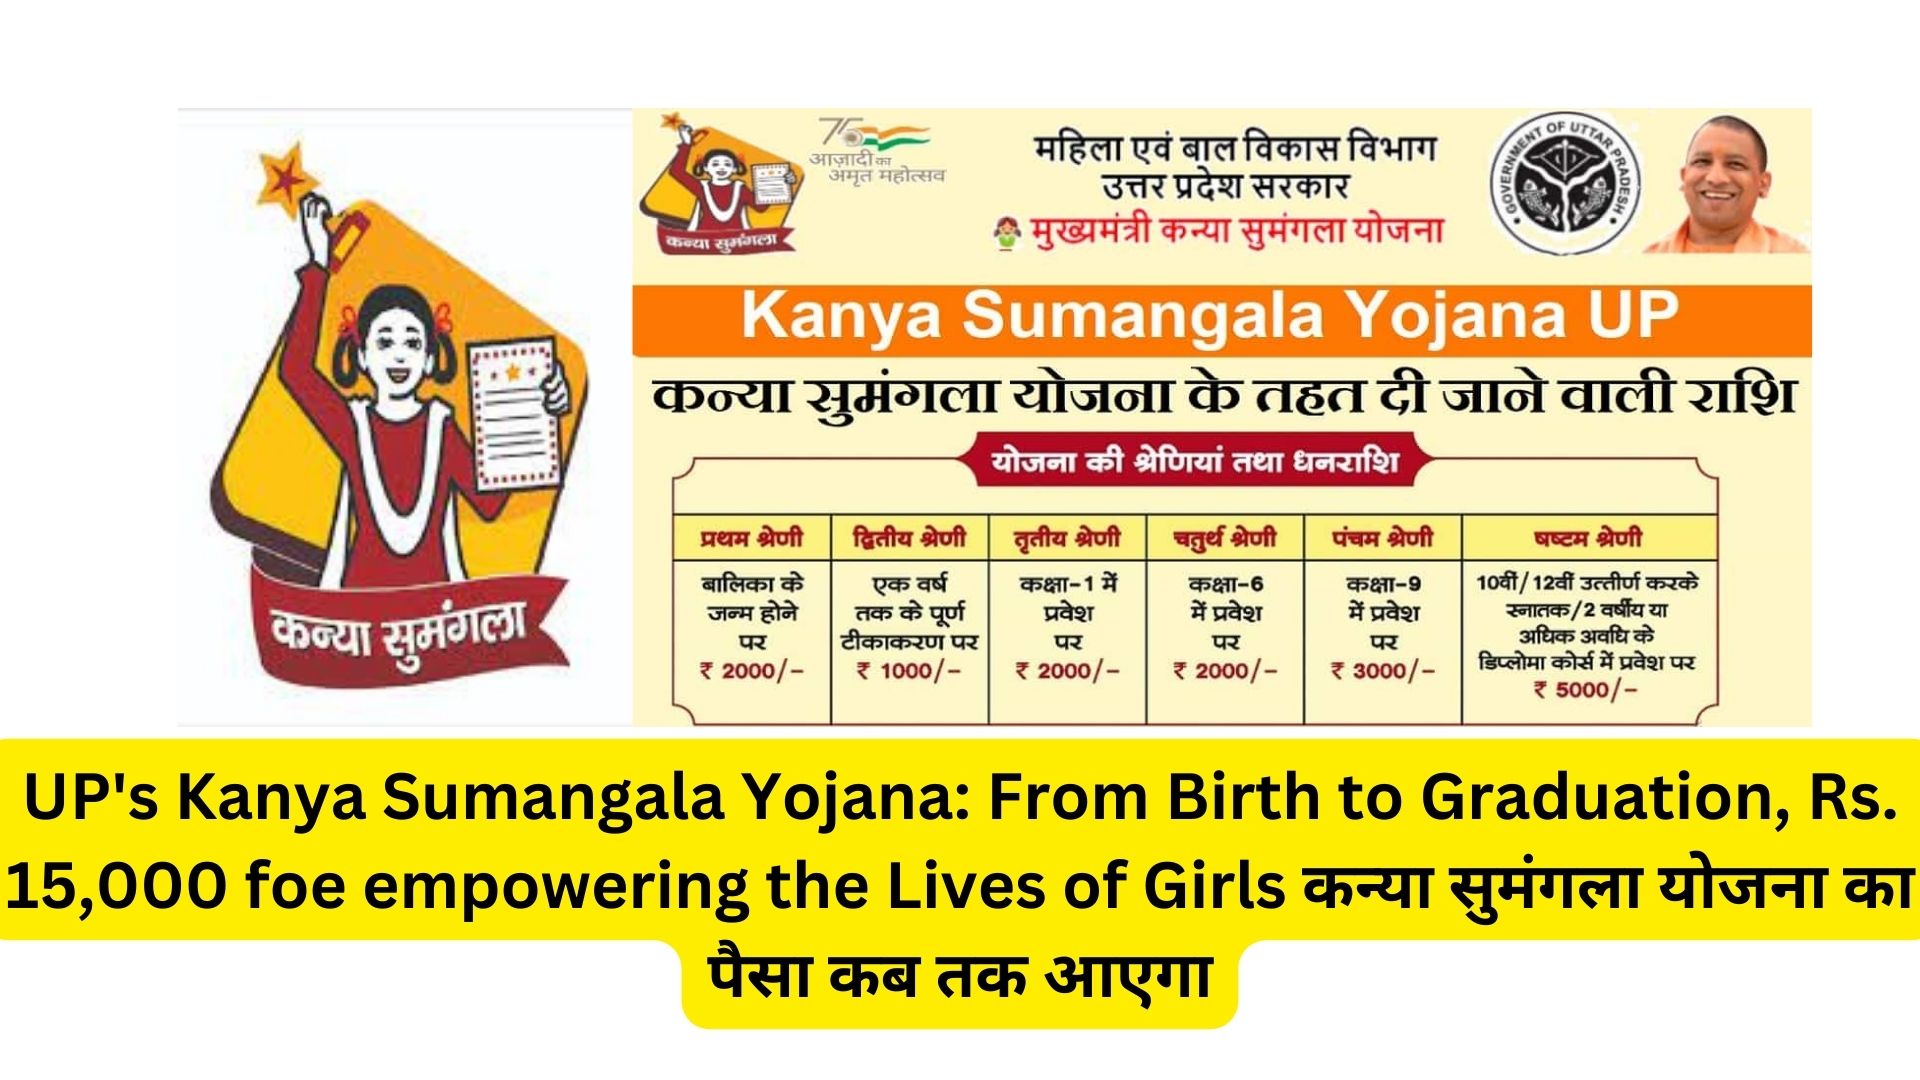 UP's Kanya Sumangala Yojana: From Birth to Graduation, Rs. 15,000 foe empowering the Lives of Girls कन्या सुमंगला योजना का पैसा कब तक आएगा